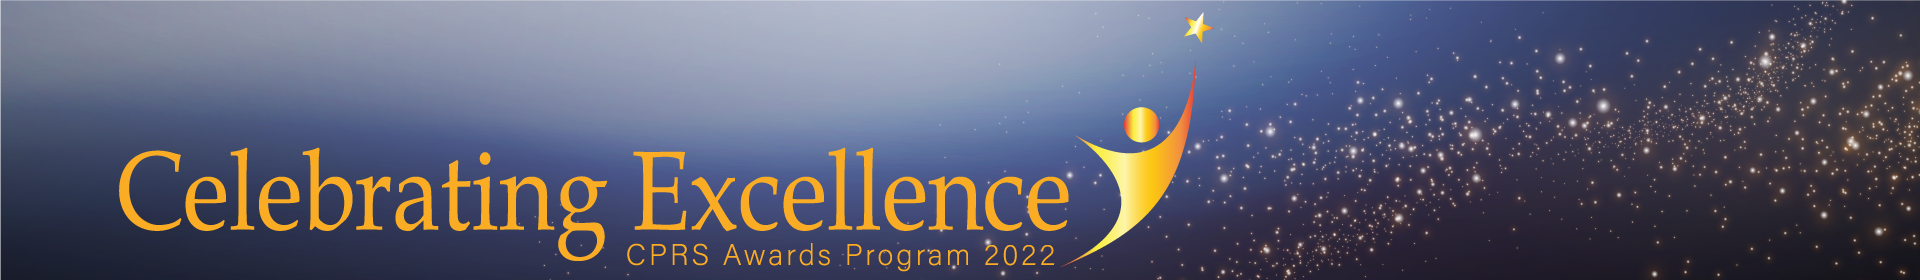 Celebrating Excellence CPRS Awards Program 2022 glittery banner